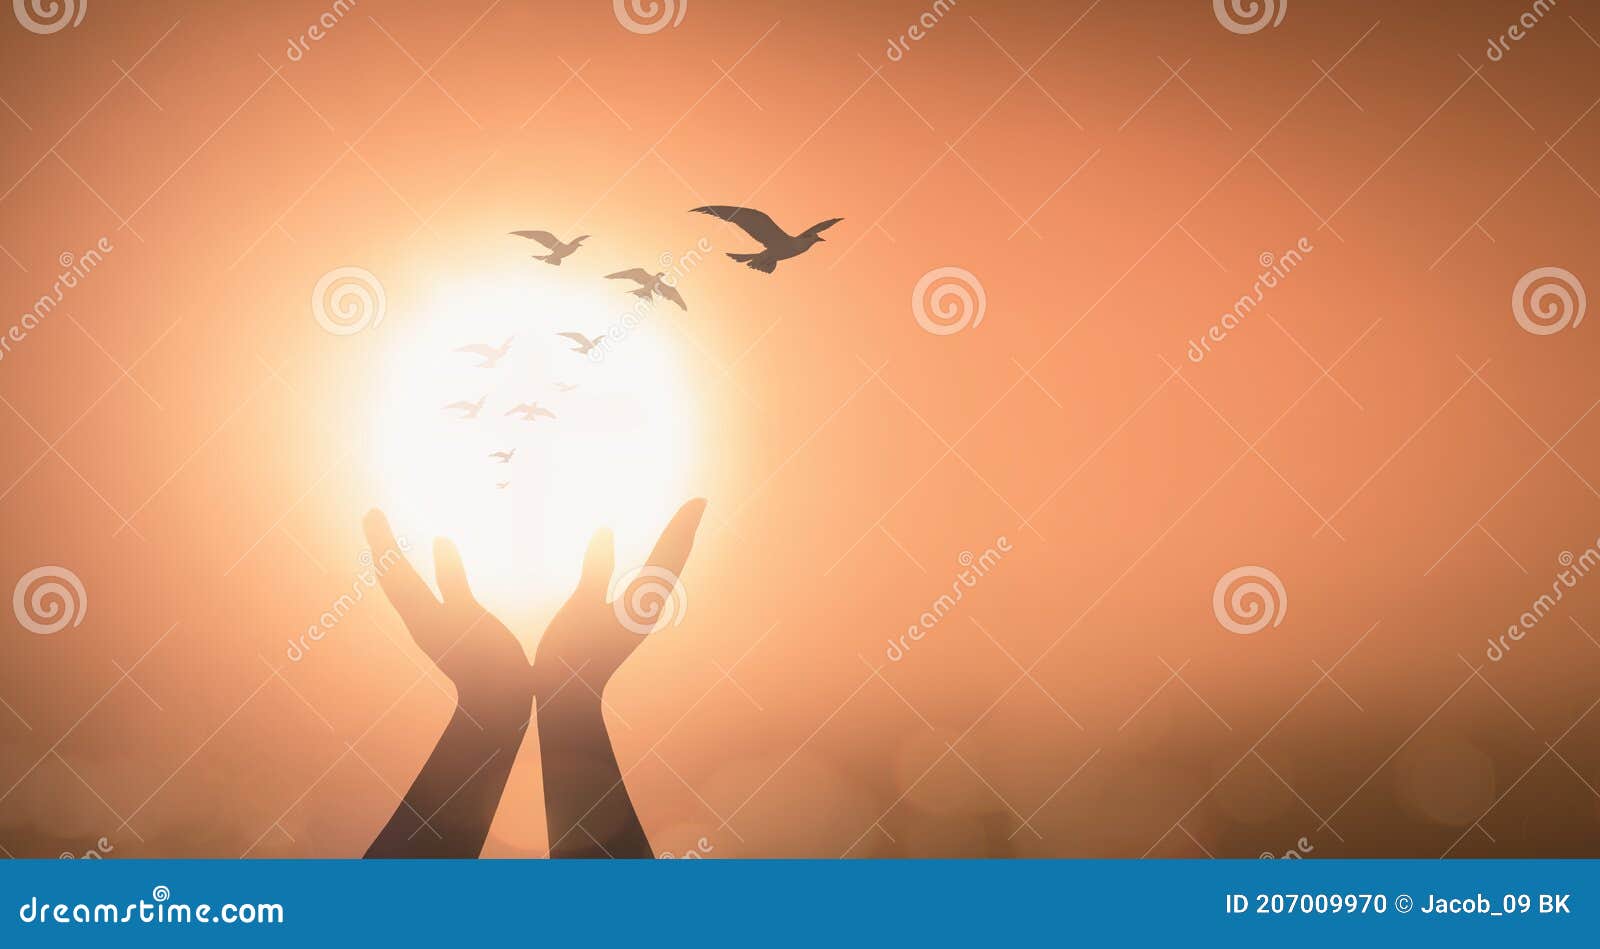 prayer hands with birds flying